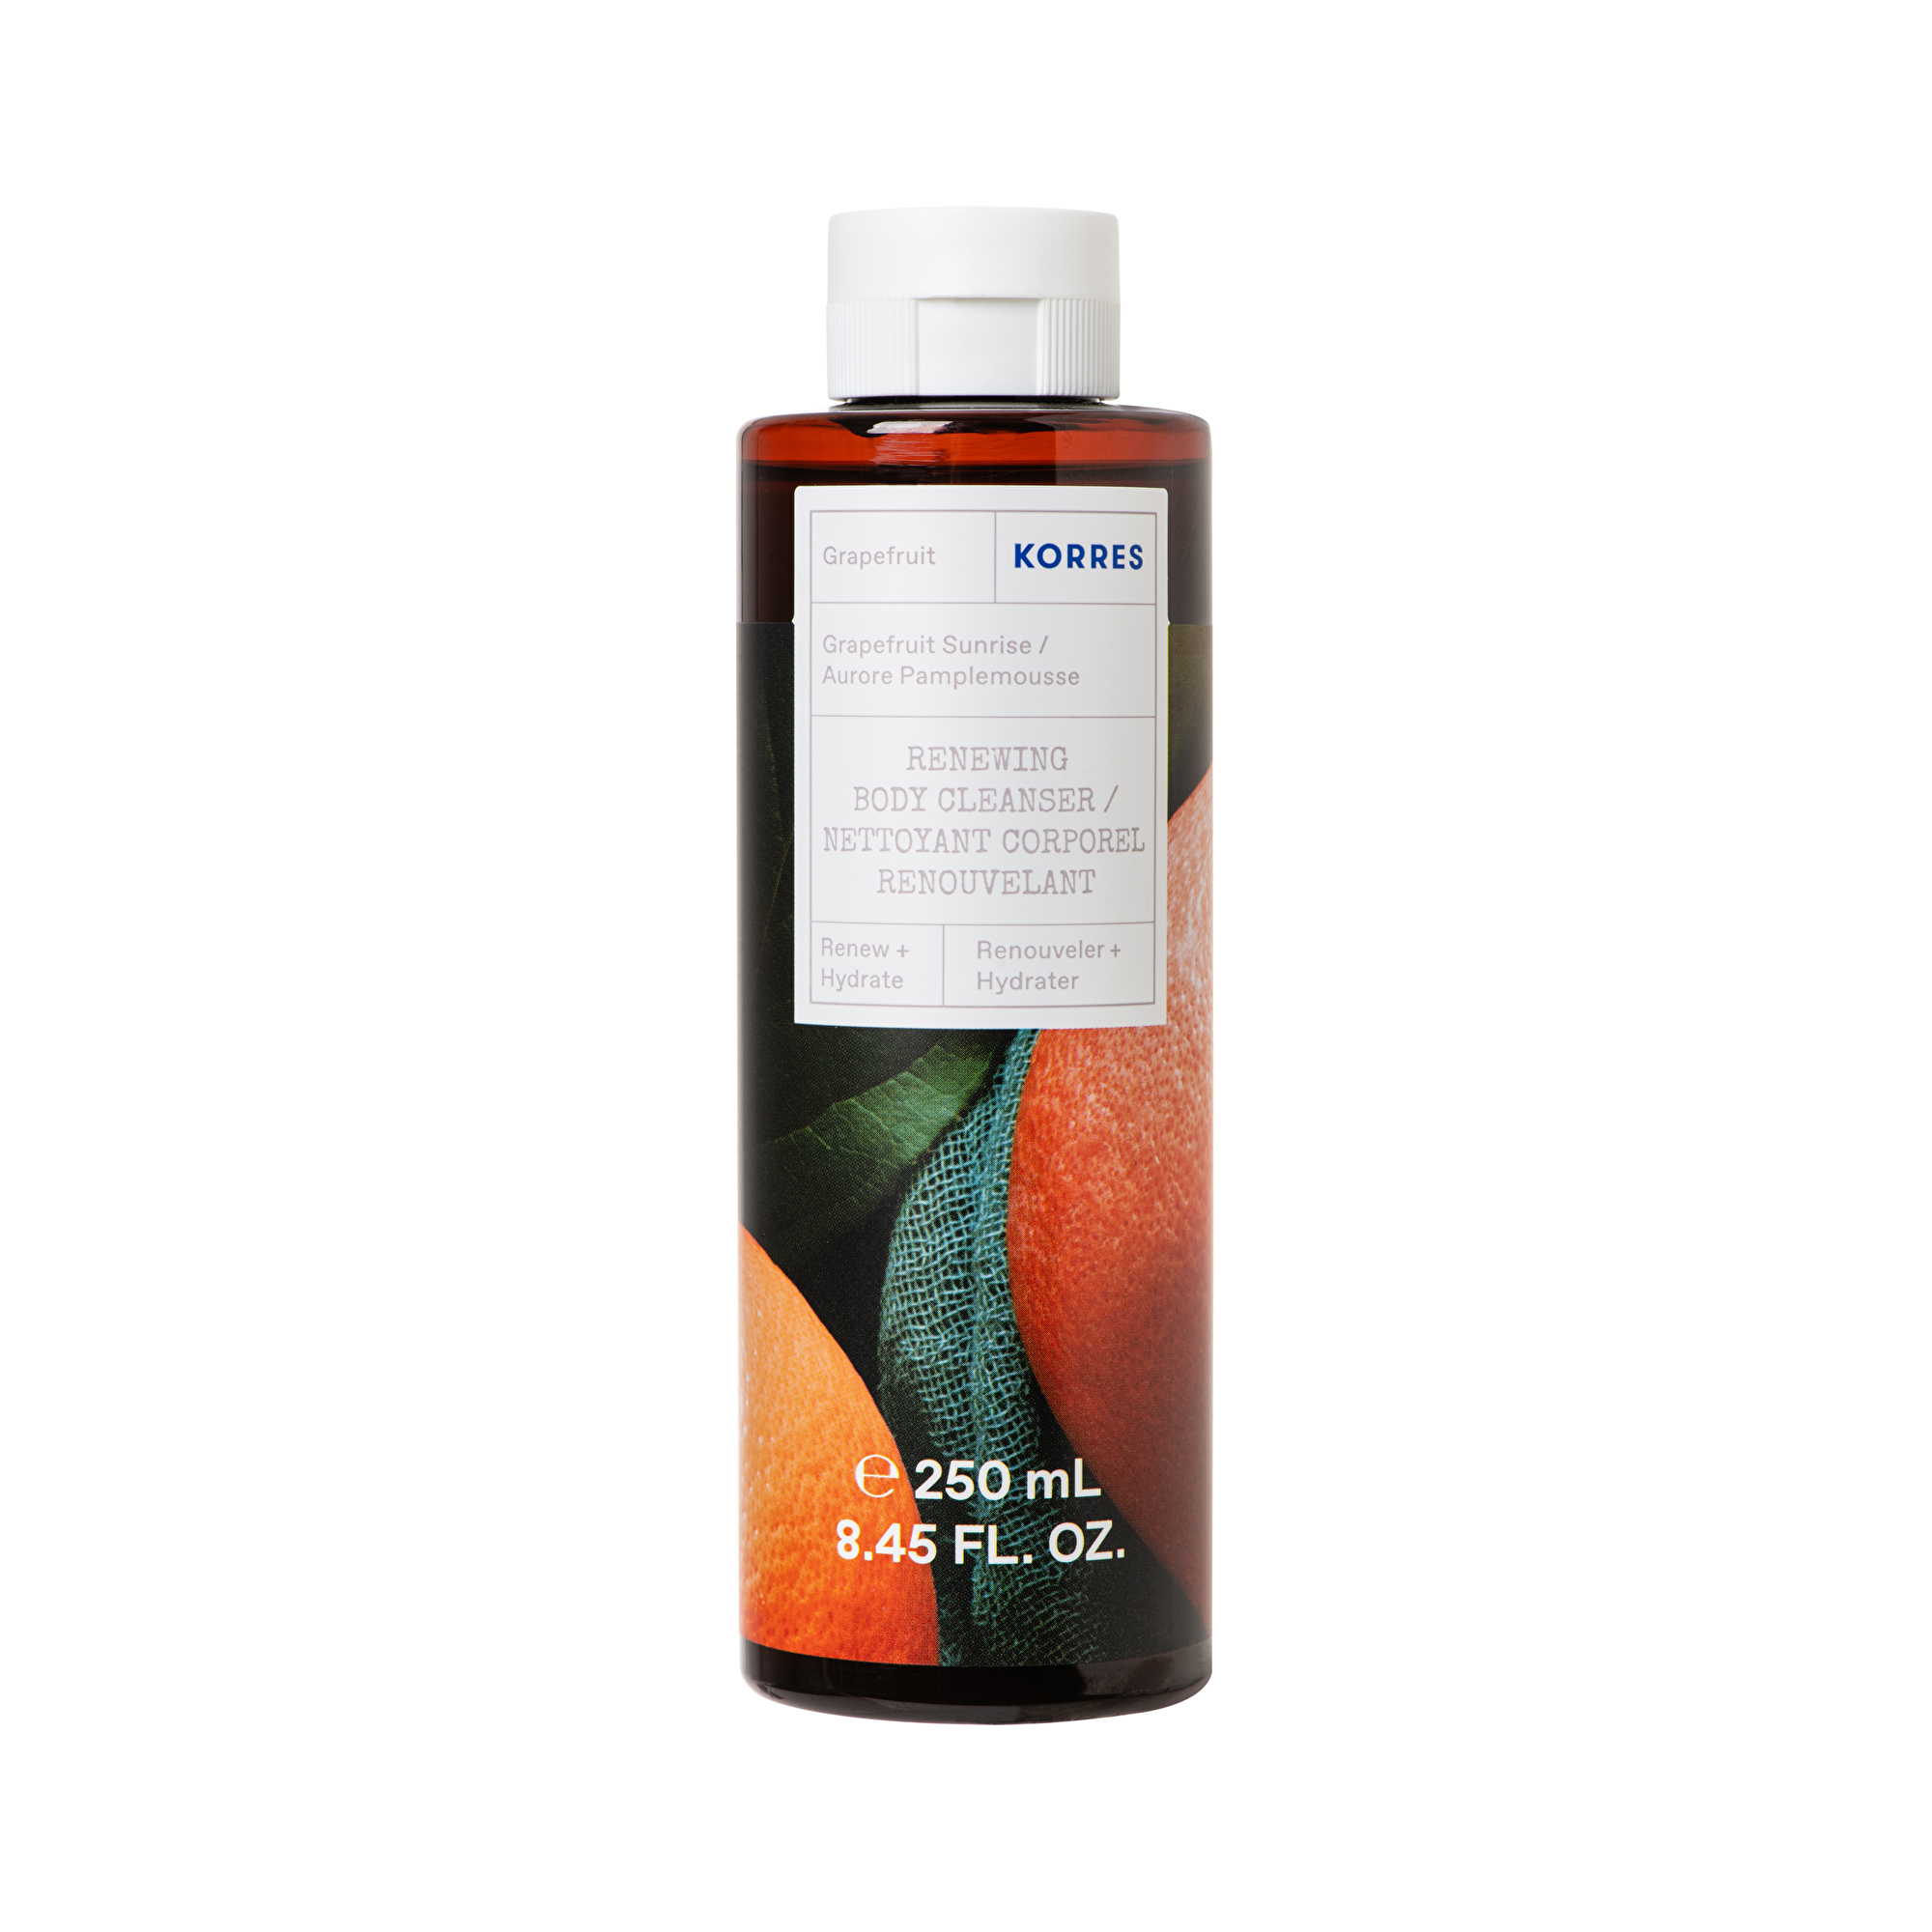 Zobrazit detail výrobku Korres Sprchový gel Grapefruit Sunrise (Body Cleanser) 250 ml